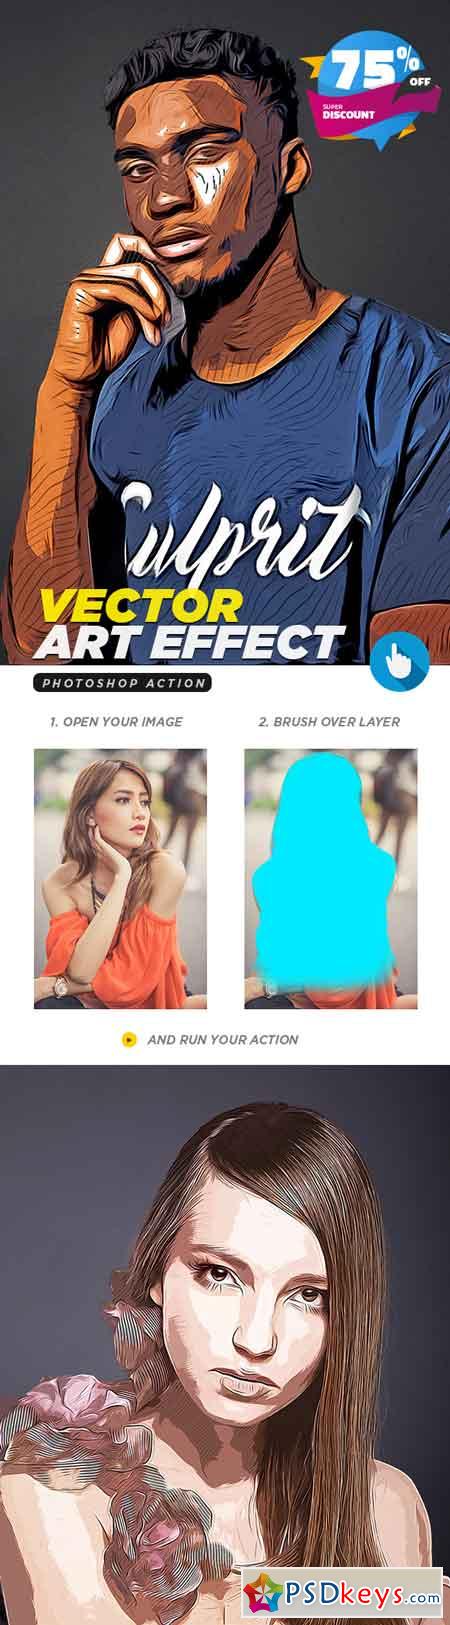 Vector Art Photoshop Action 21669828